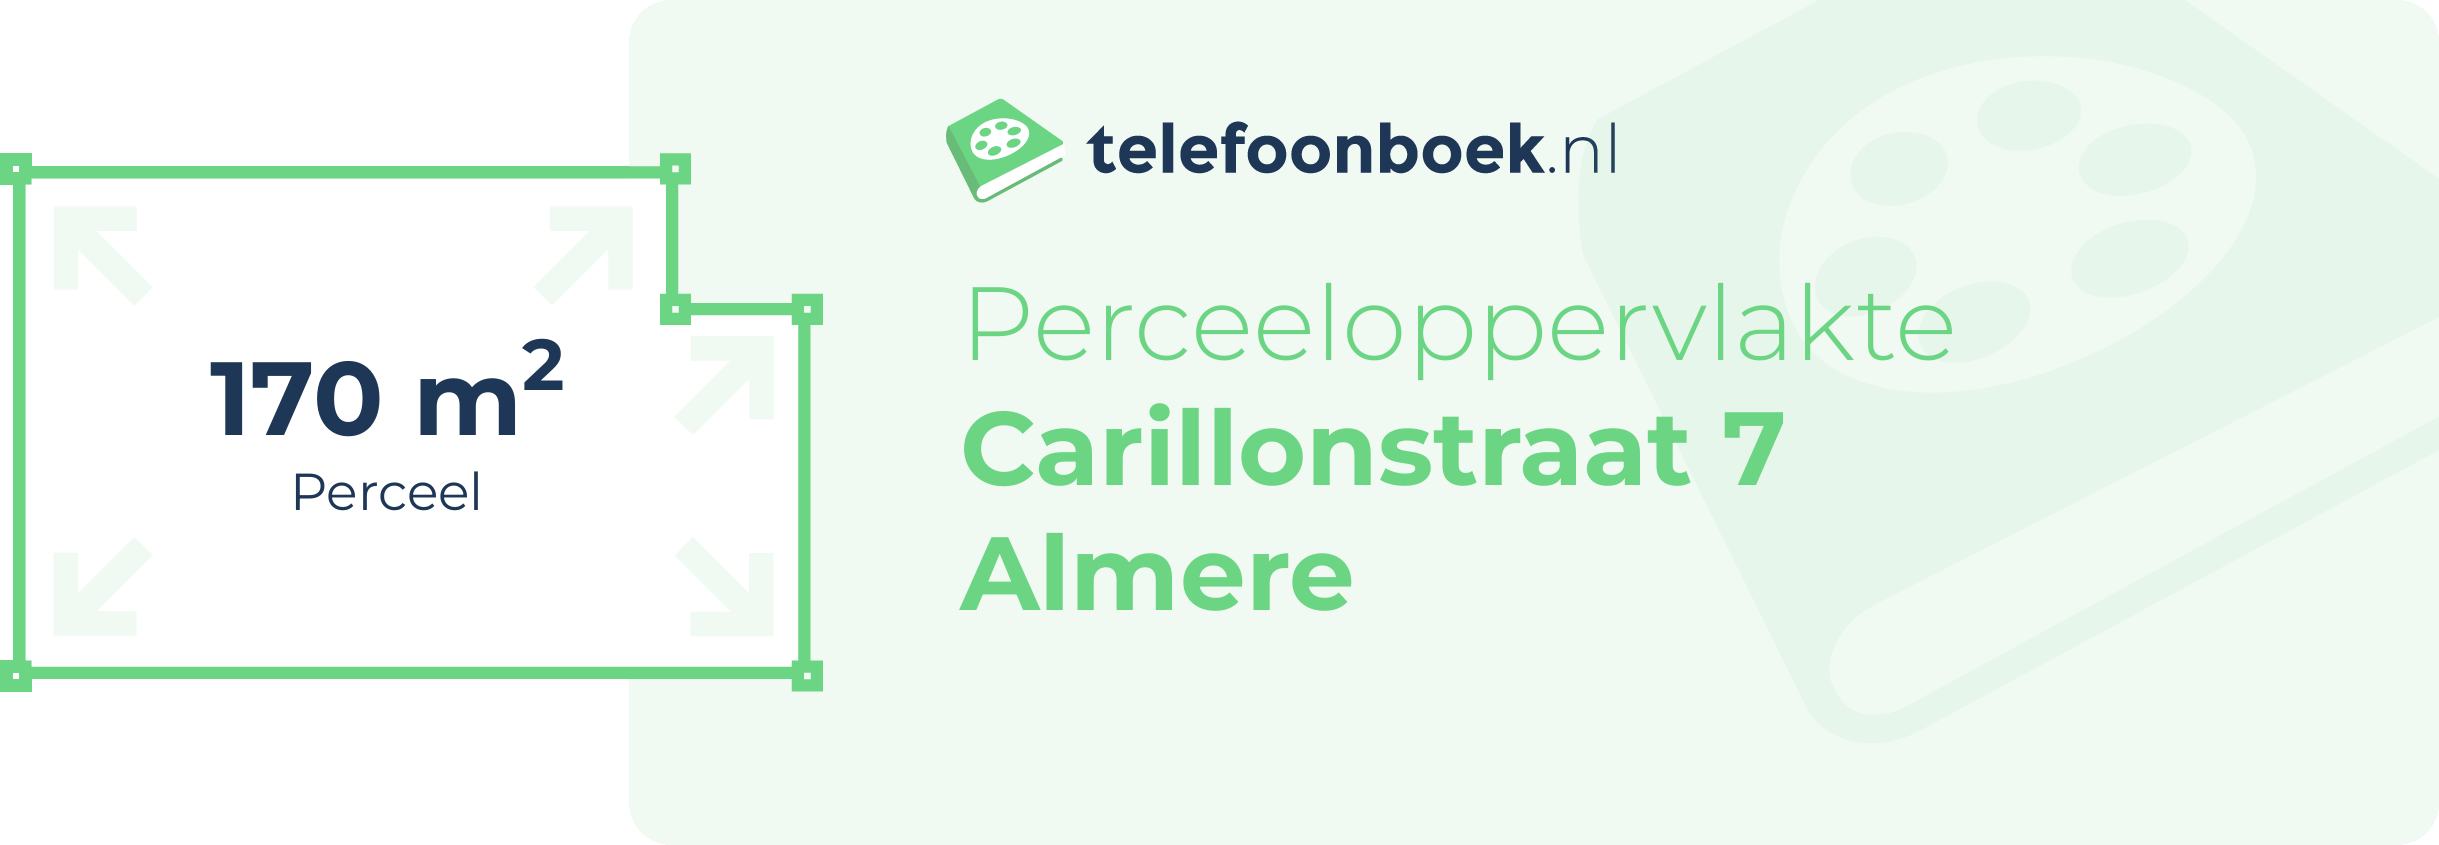 Perceeloppervlakte Carillonstraat 7 Almere